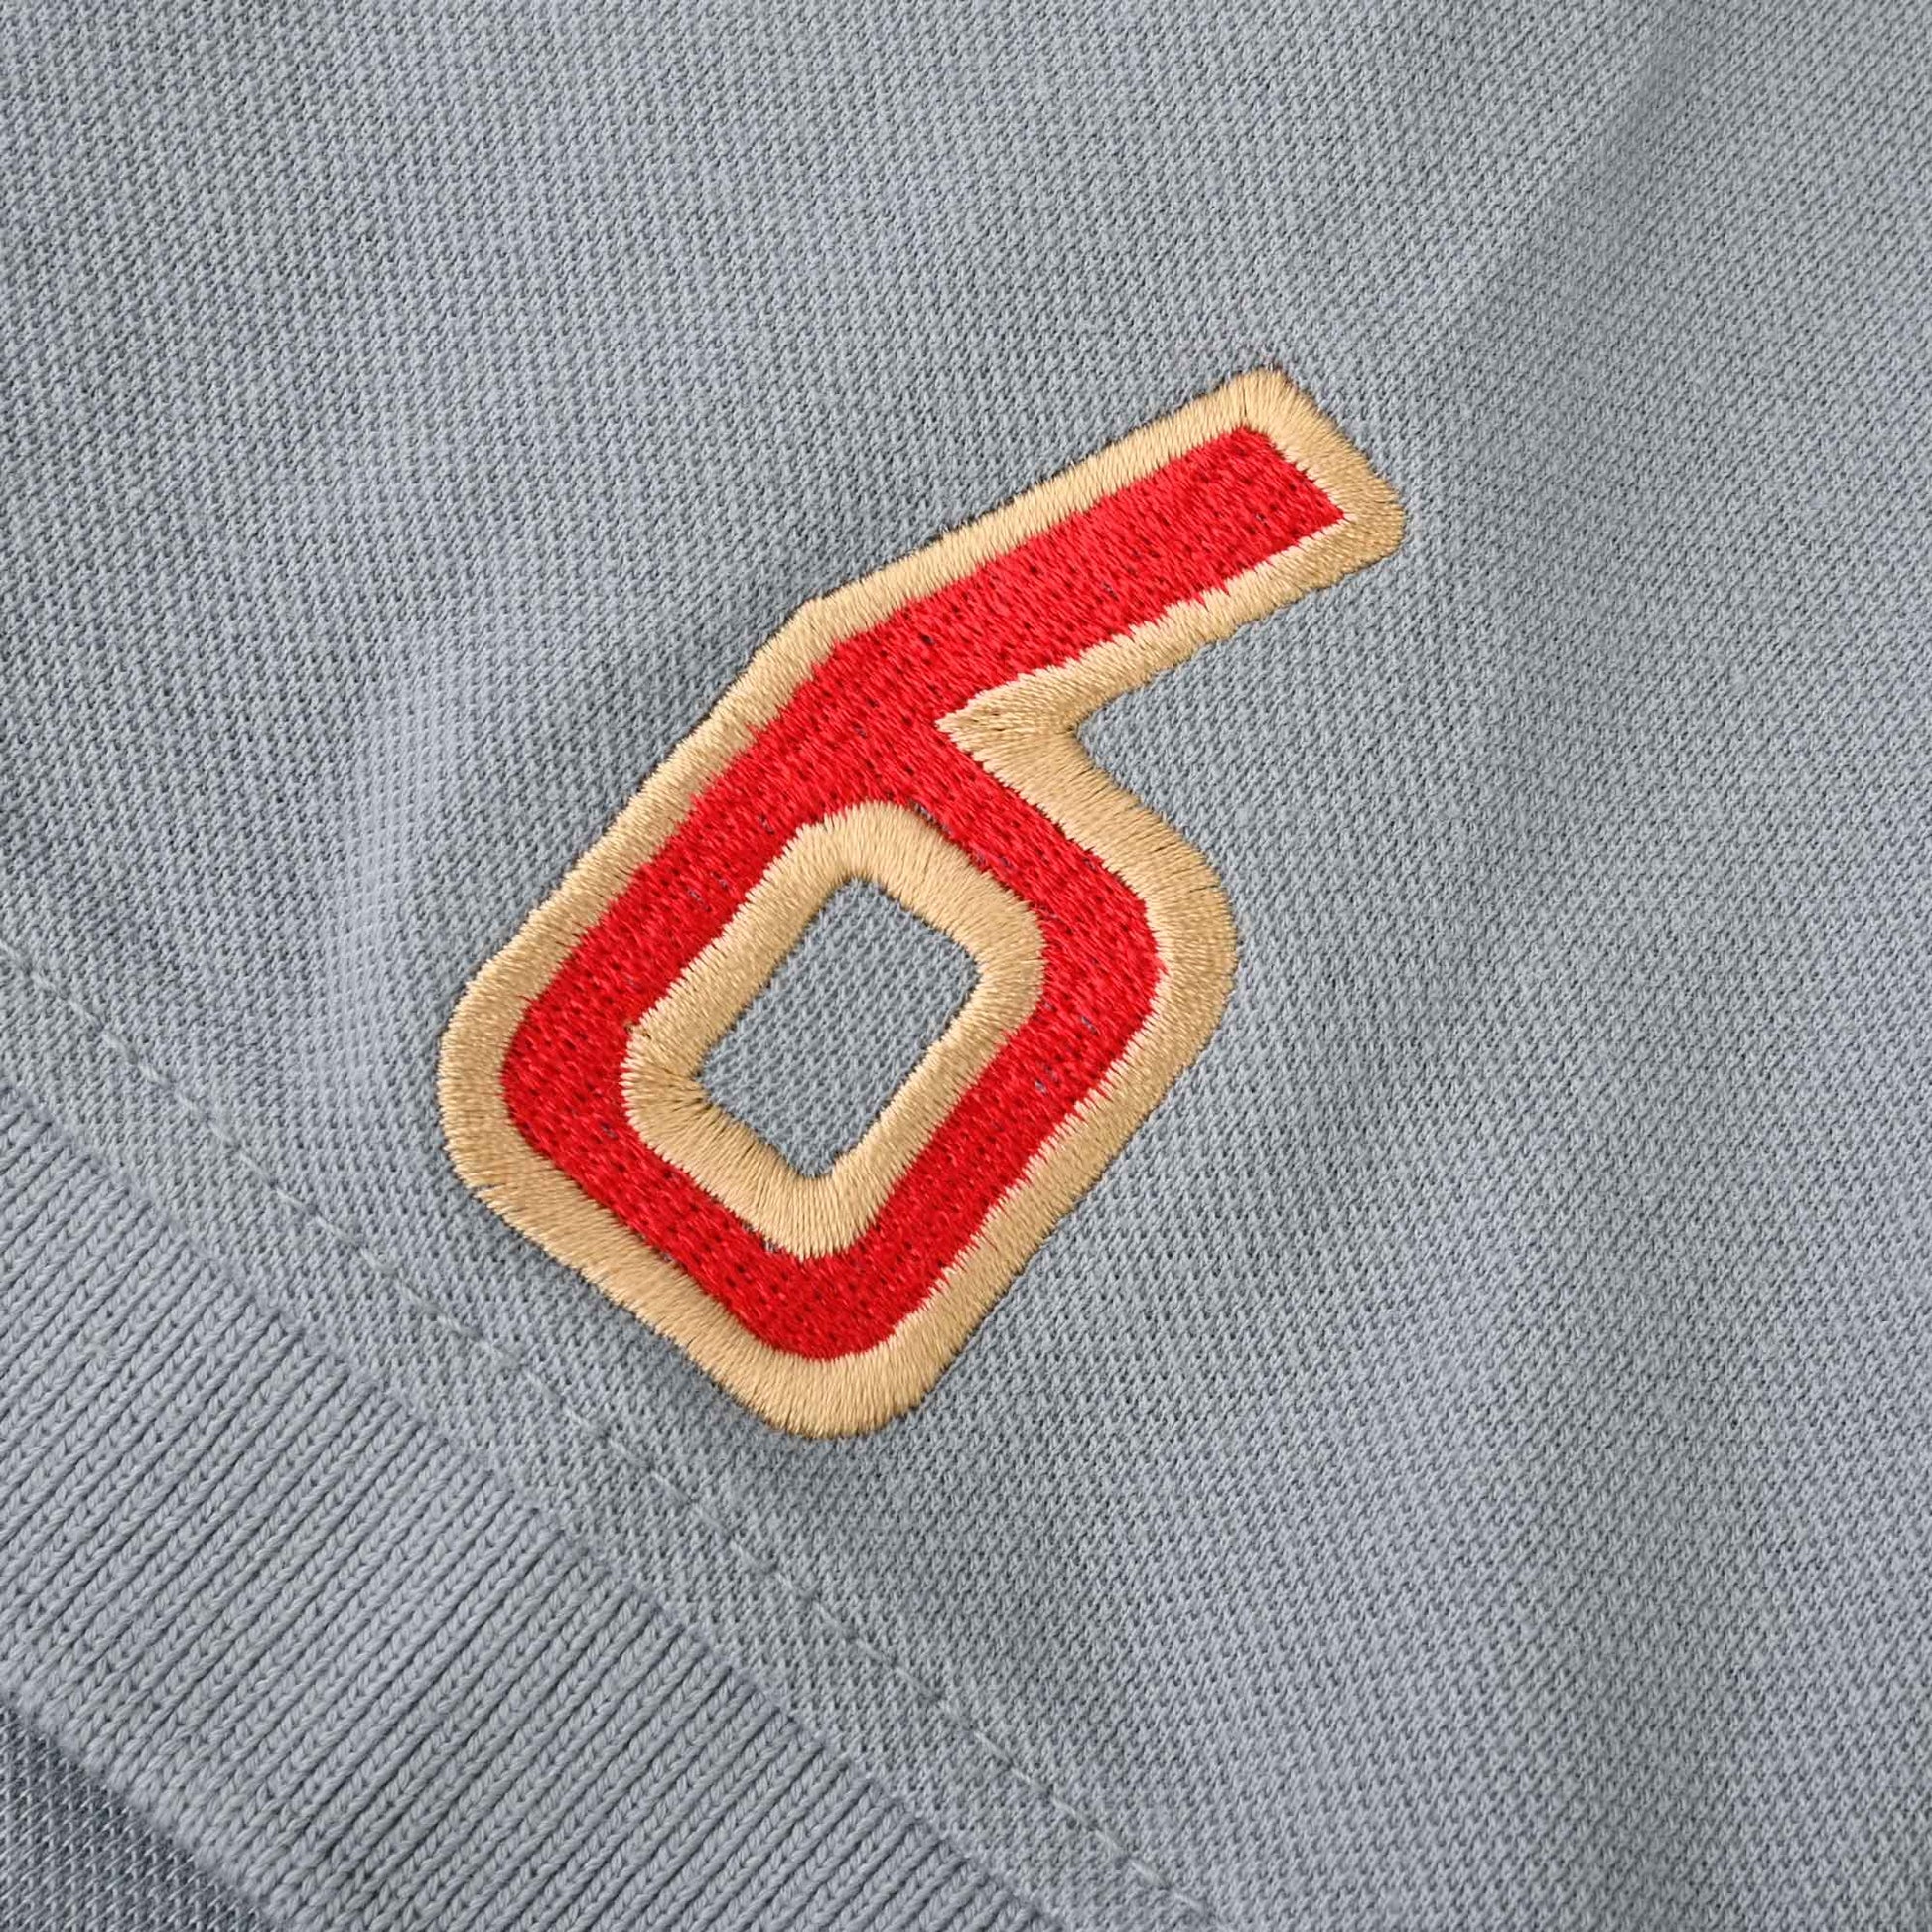 Polo Republica Men's USA Crest & 6 Embroidered Short Sleeve Polo Shirt